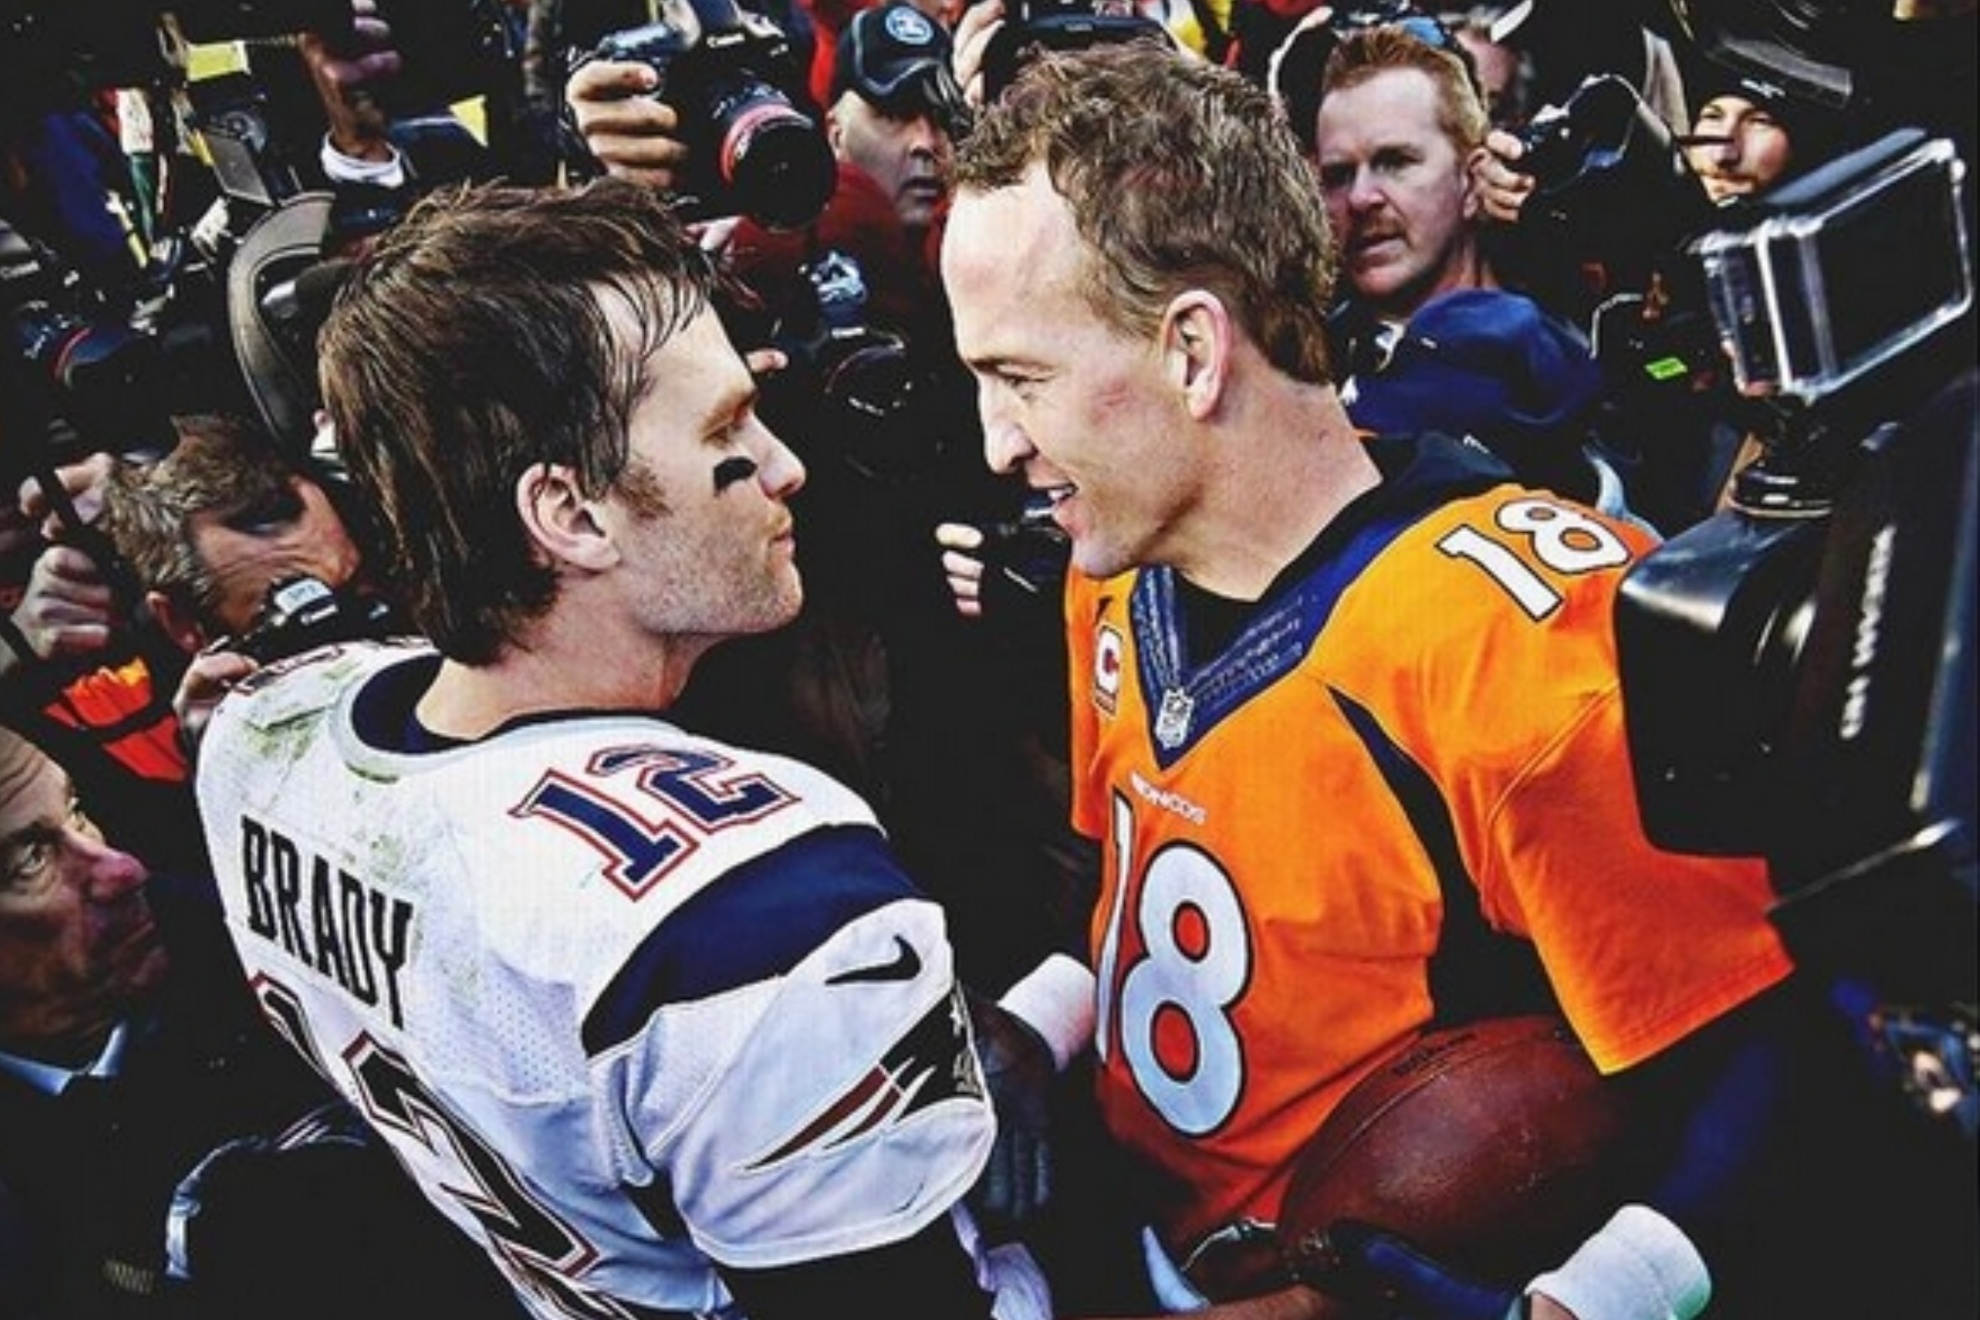 Peyton Manning Super Bowl wins: Did he get more than Tom Brady, Joe Montana or Patrick Mahomes?